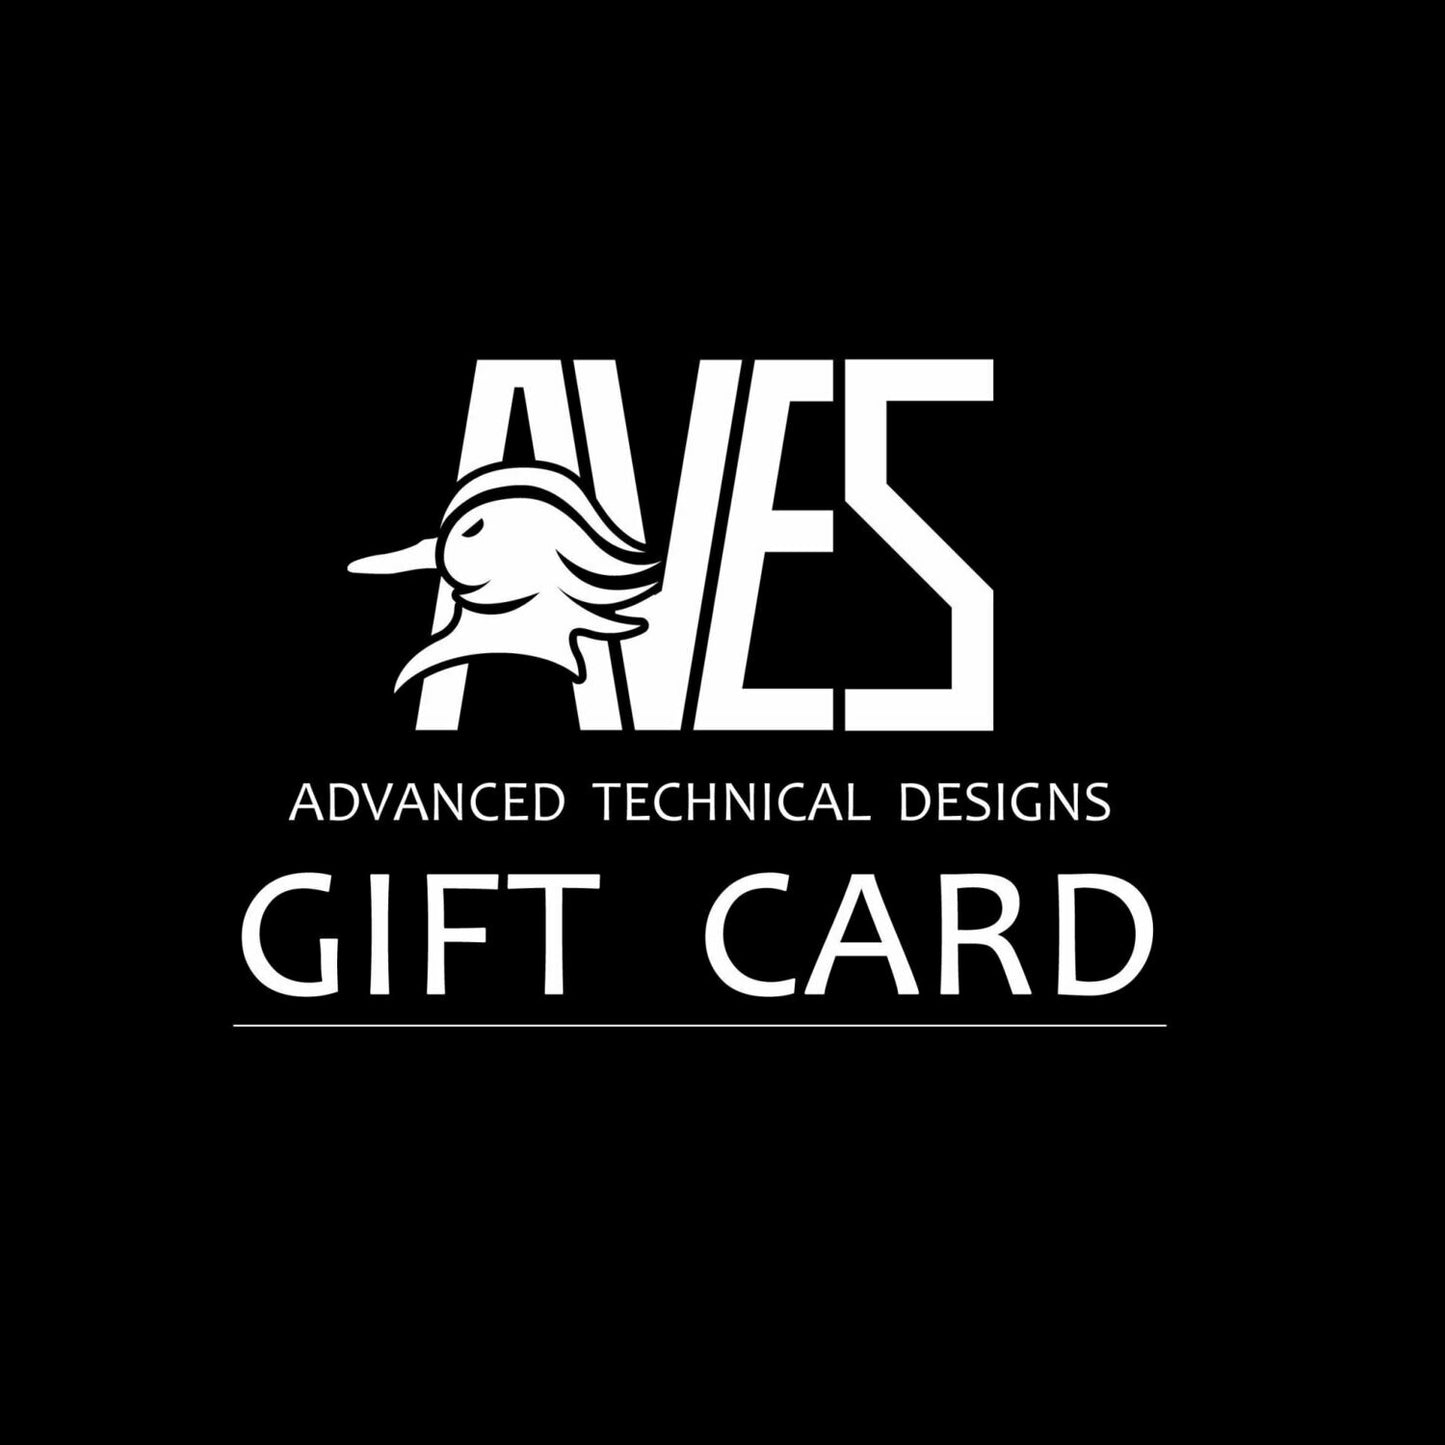 Aves Gift Card